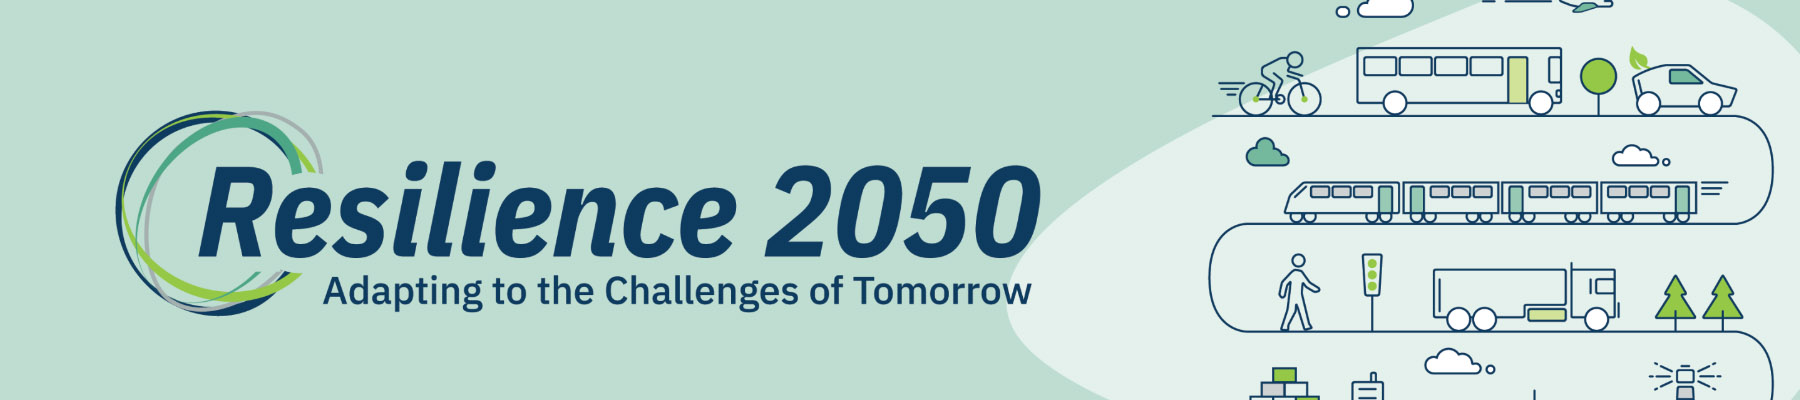 Resilience 2050 - Baltimore Regional Transportation Board Public Meeting